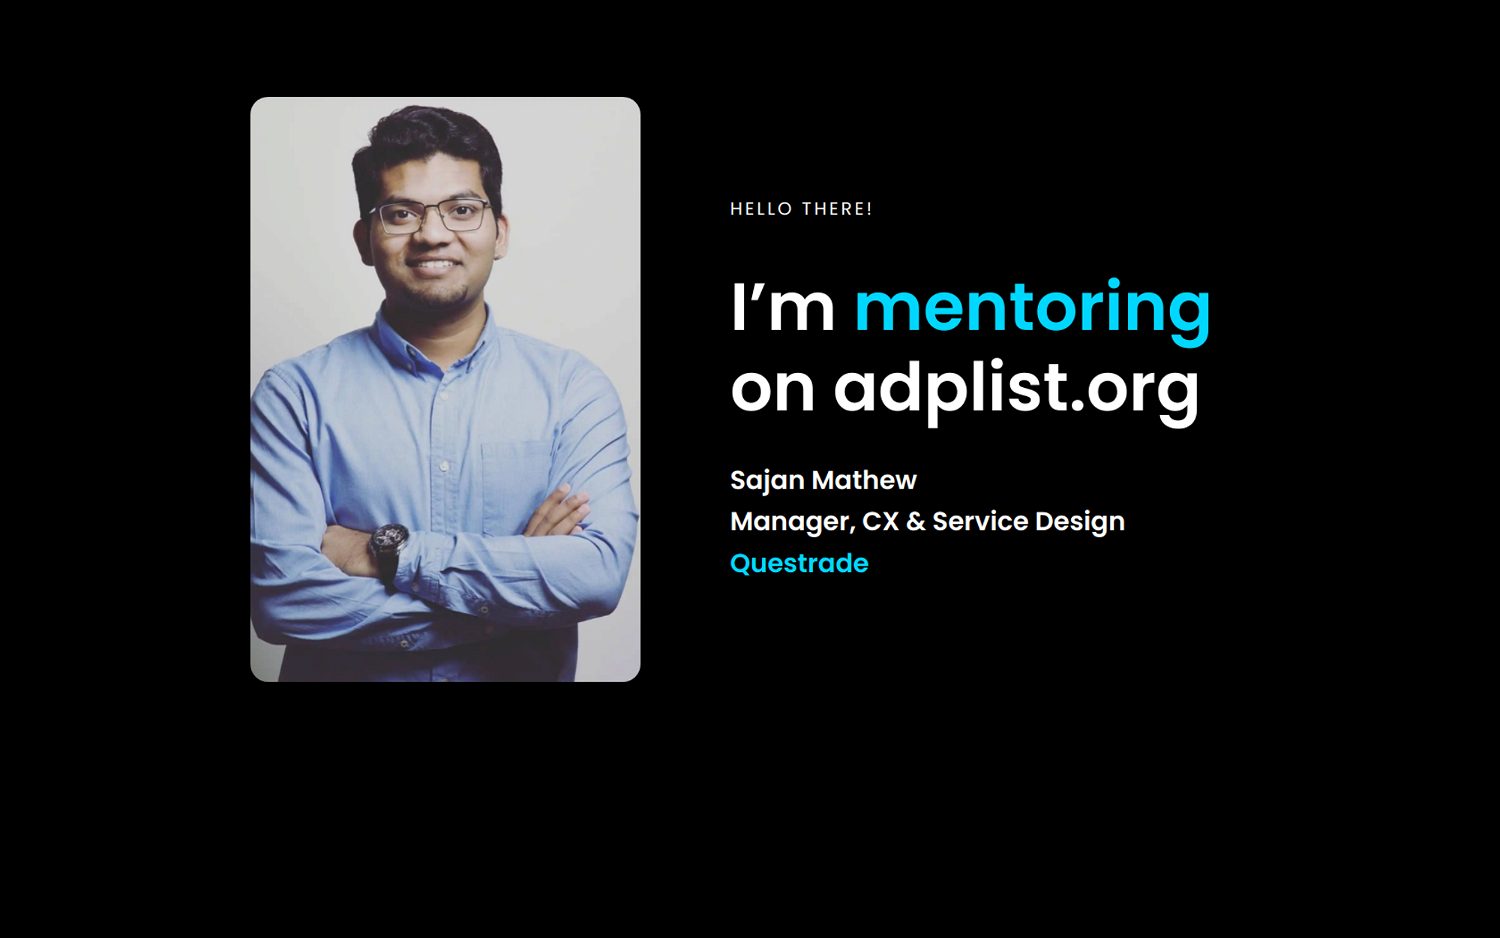 Get mentored by Sajan Mathew on ADPList